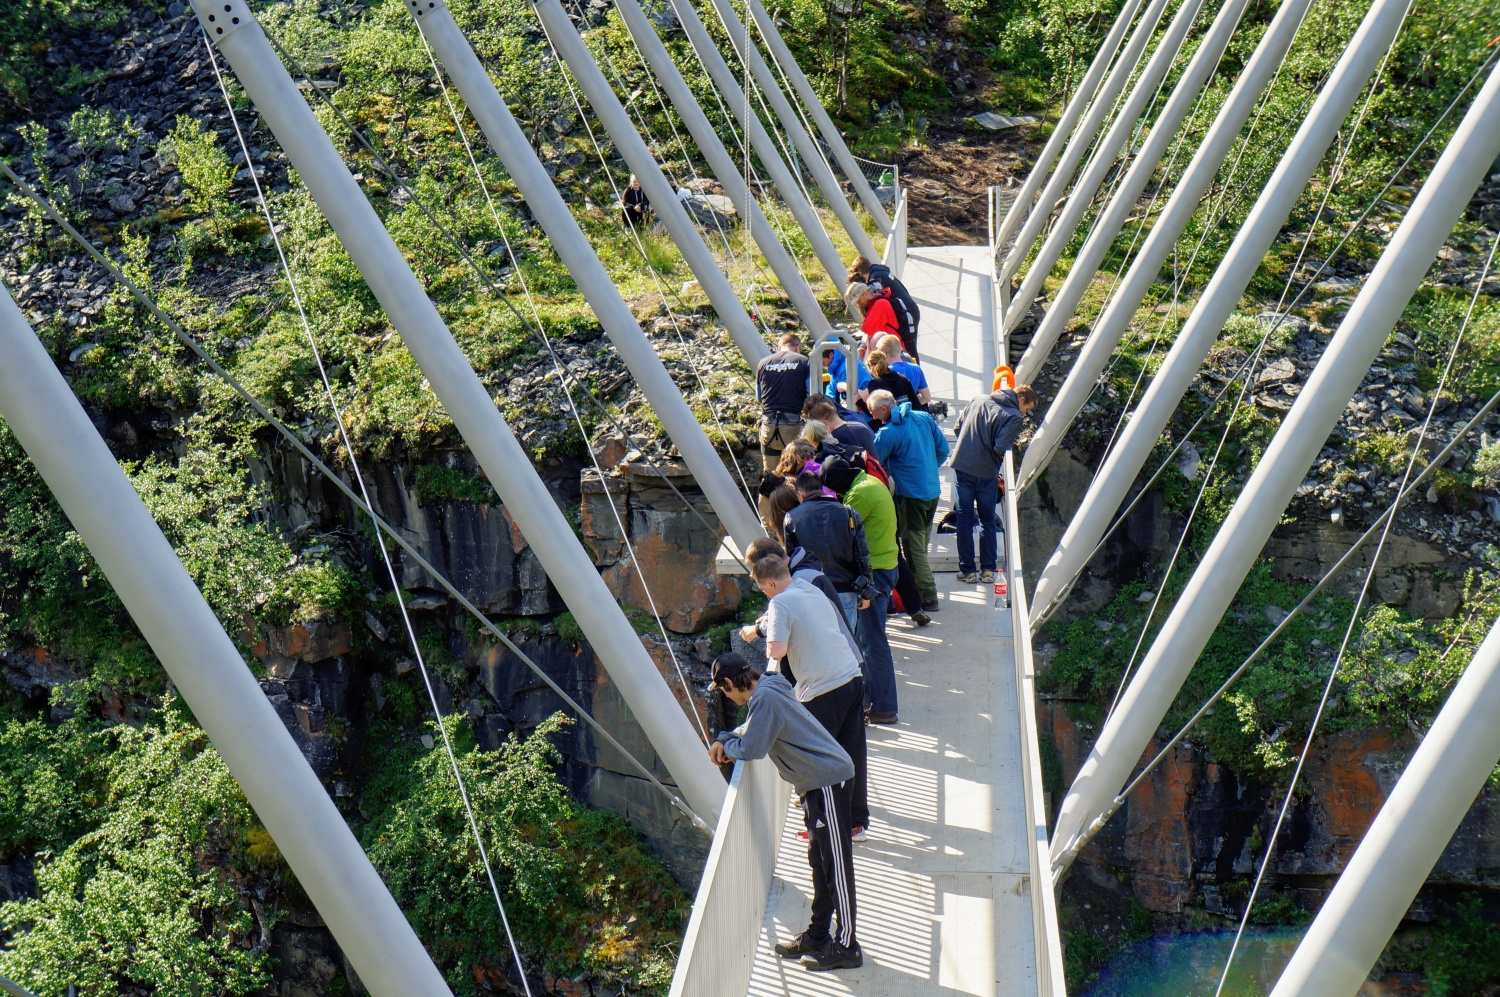 Visitors standing at the Gosha bridge enjoying the view